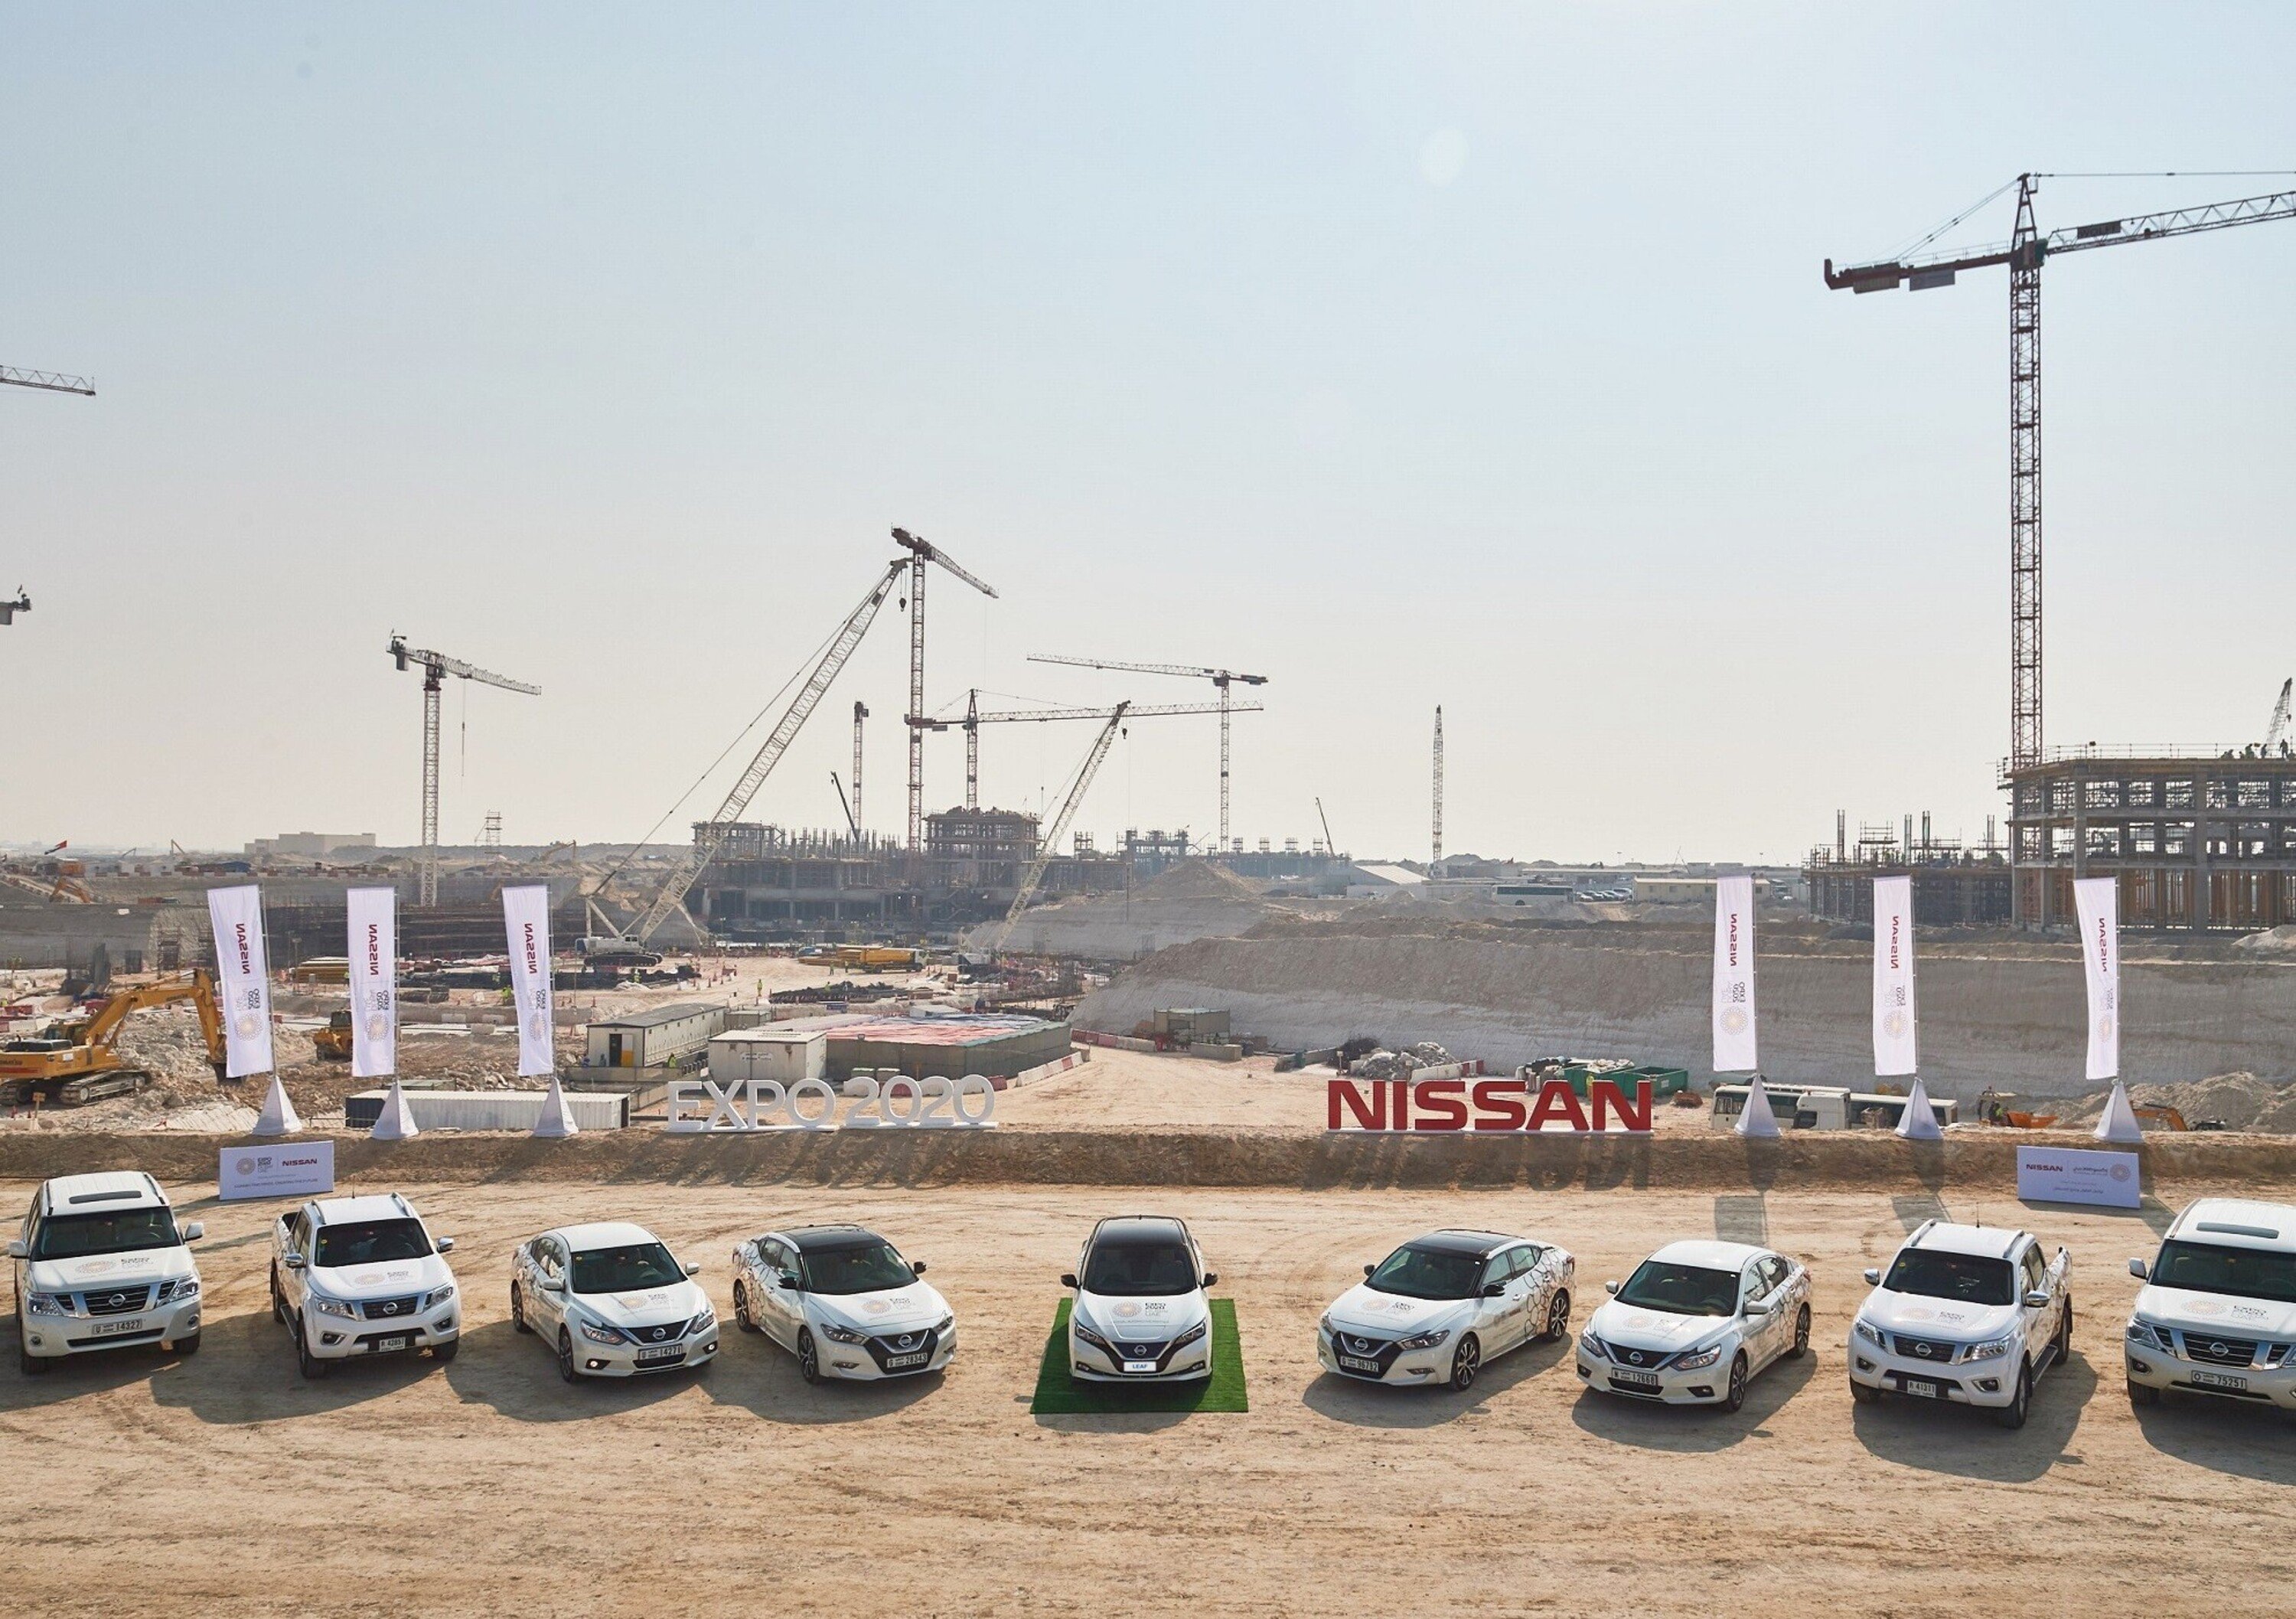 Nissan, flotta elettrica per Expo 2020 a Dubai